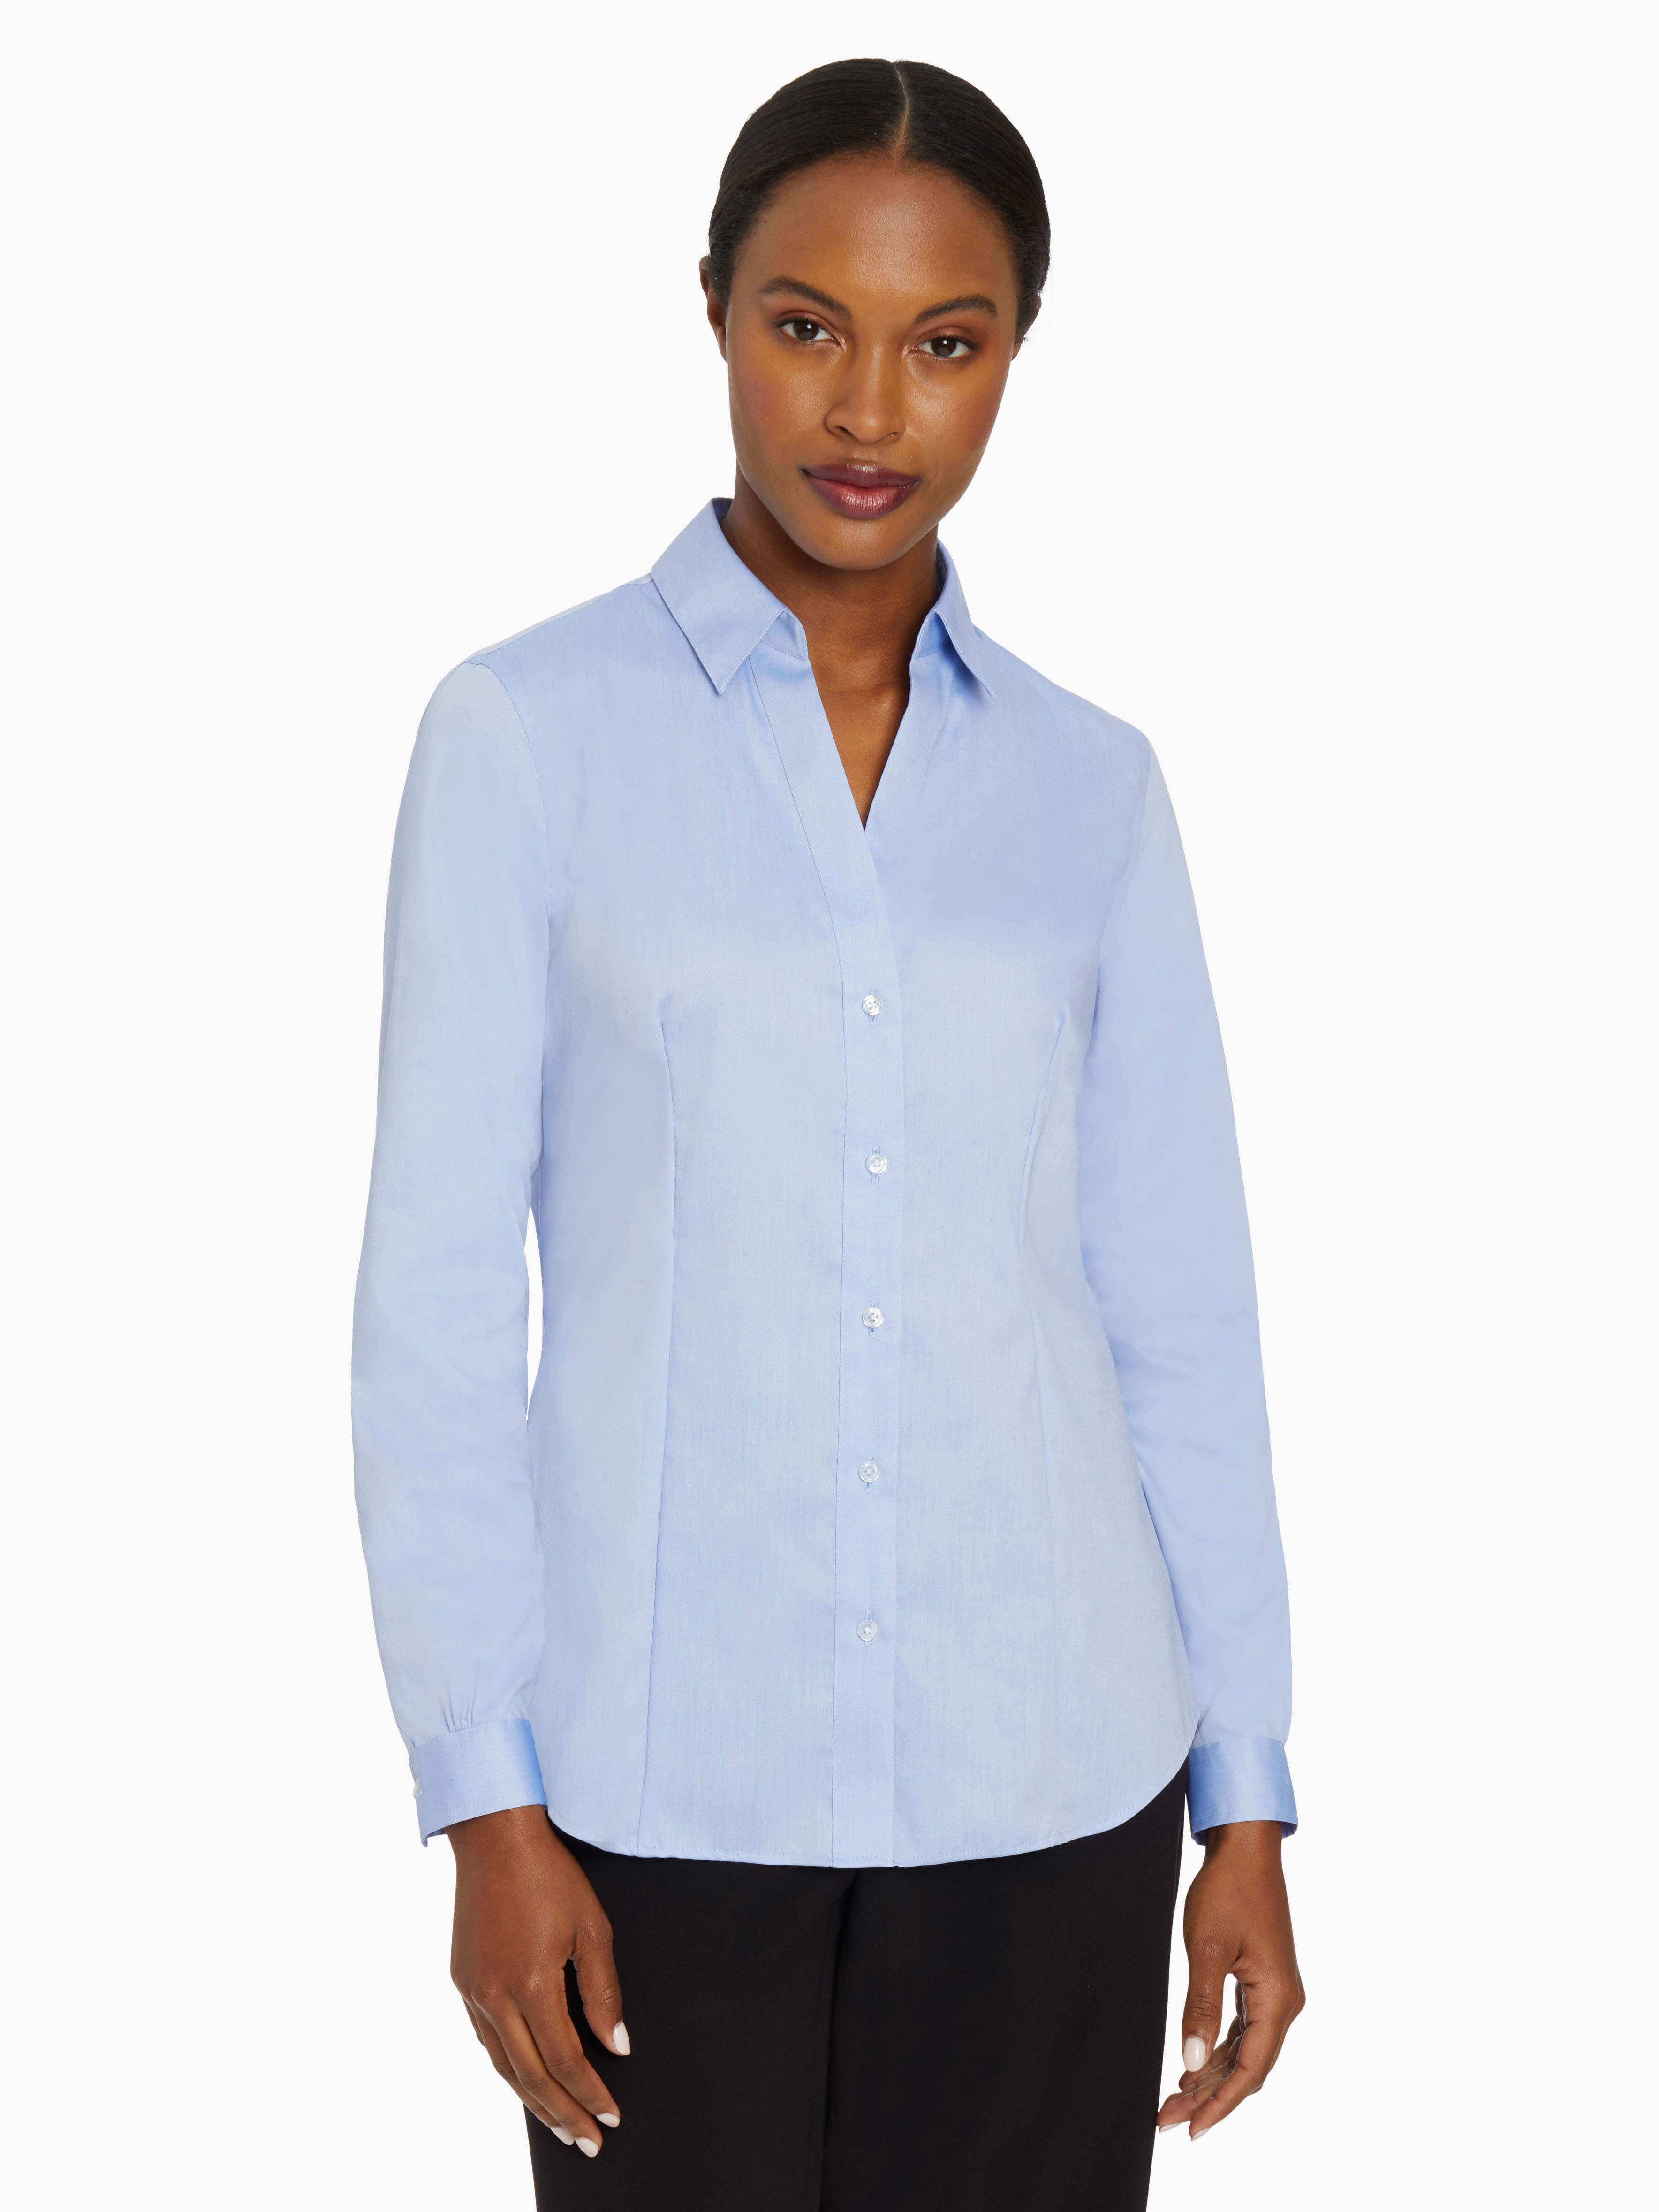 Versatile Solid Pocket Shirt Button Down Long Sleeve Shirt Casual